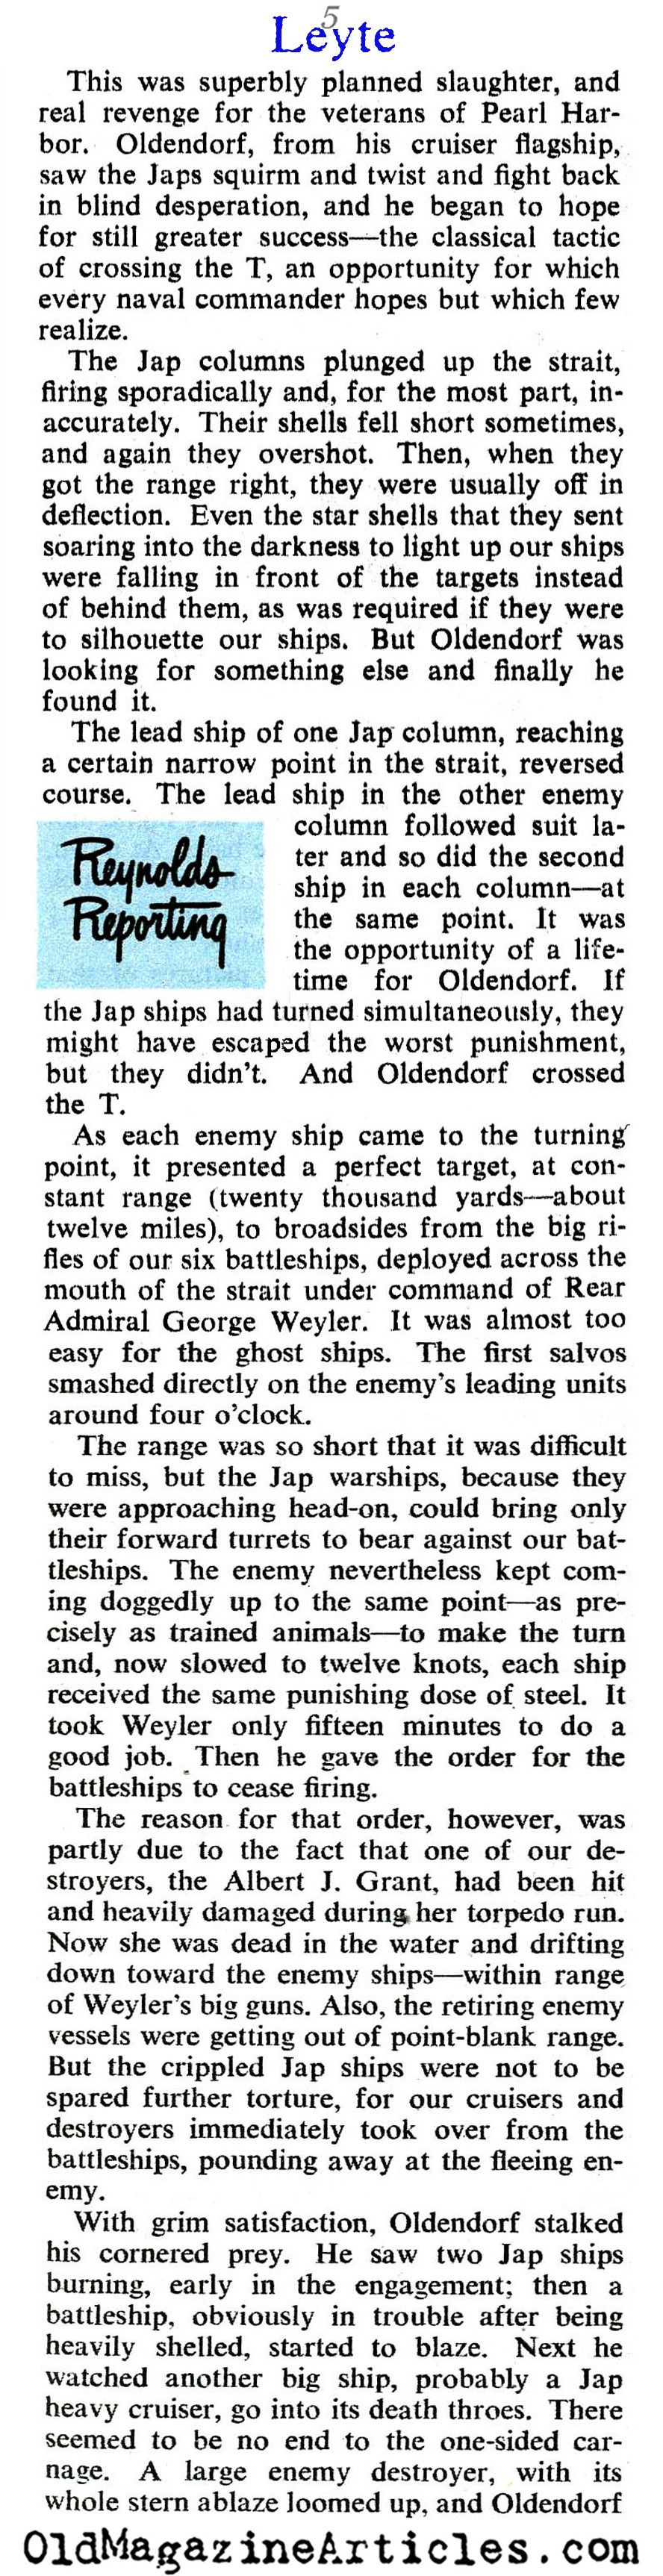 The Greatest Sea Battle [pt. 1] (Collier's Magazine, 1945)